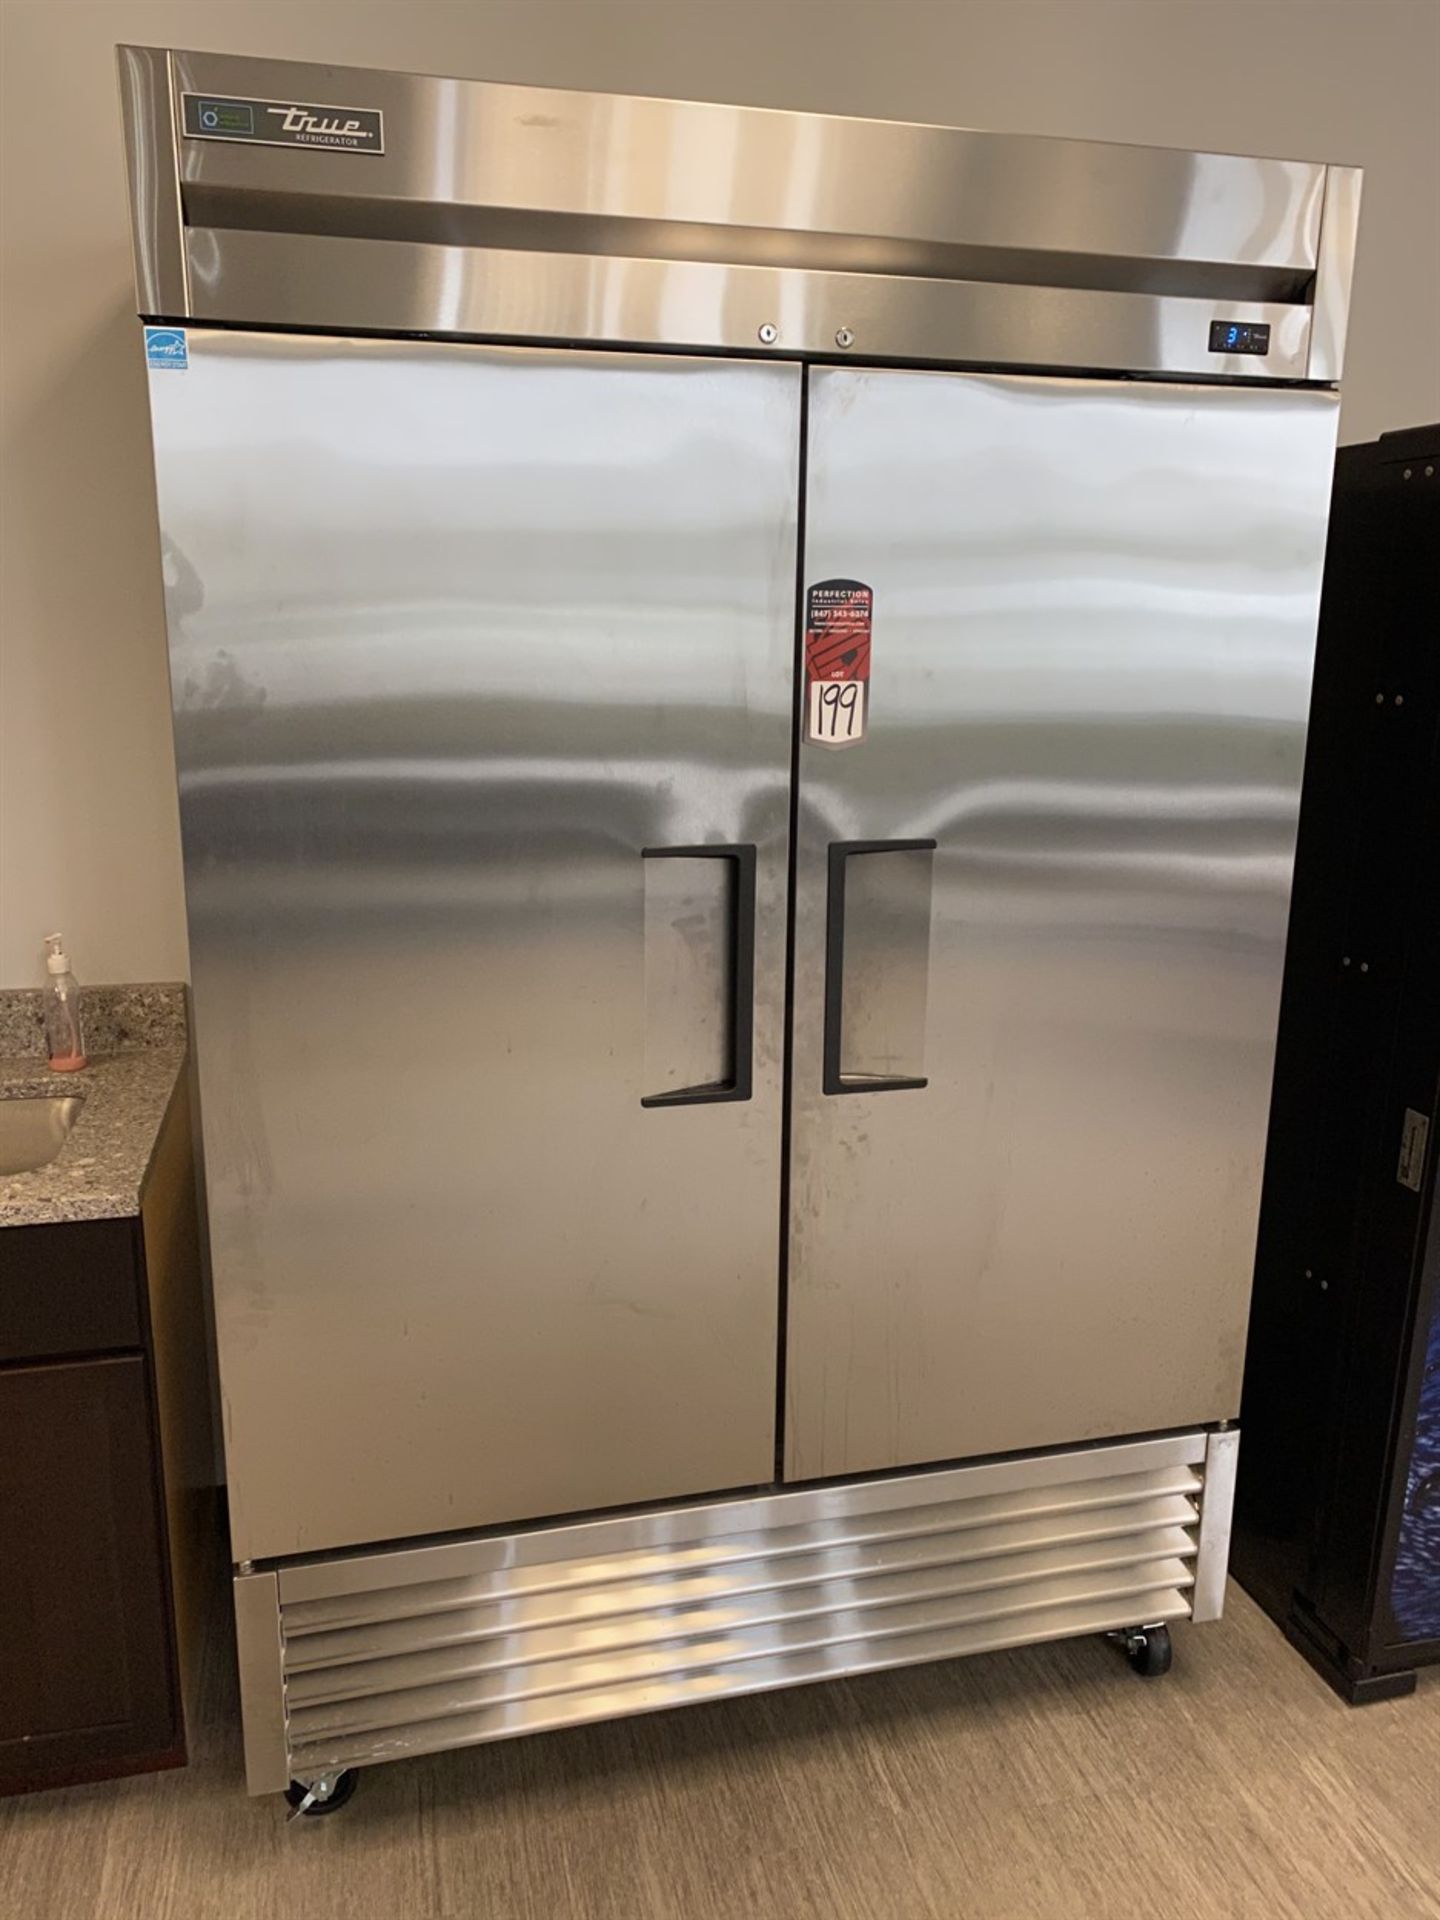 True T-49-HC Refrigerator, s/n 9673106